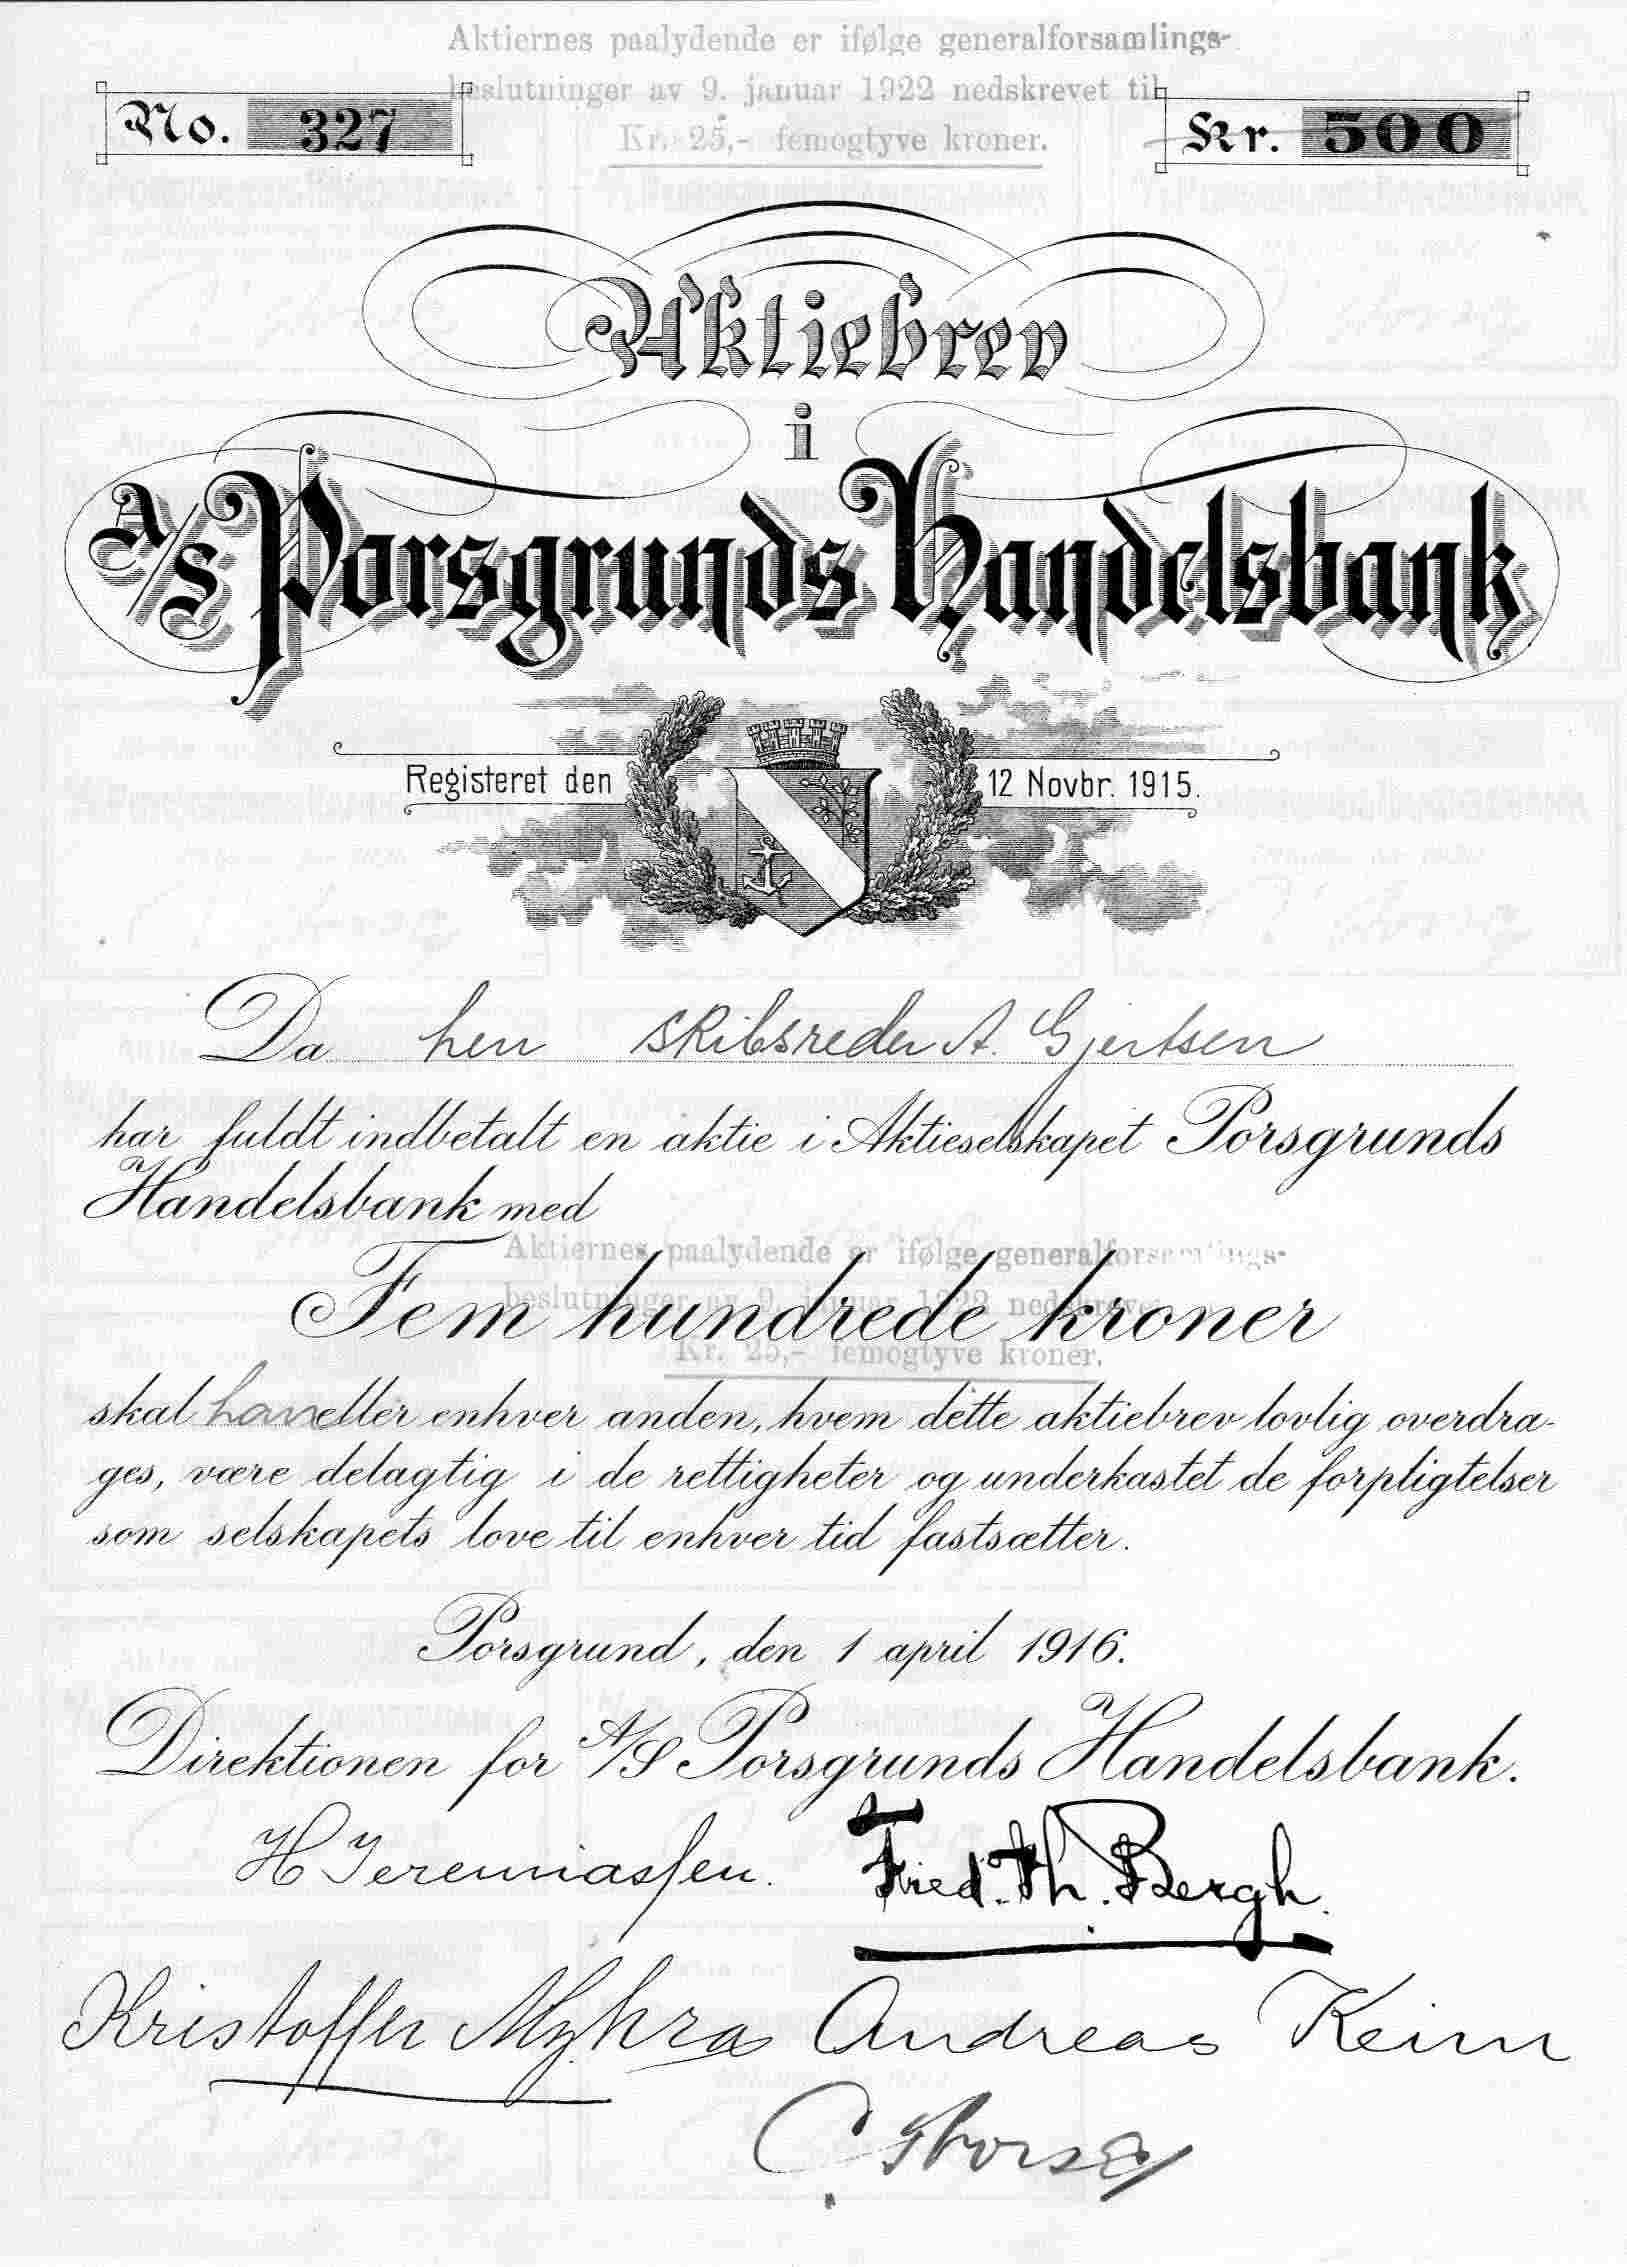 Porsgrunds handelsbank no 327 kr 500/25 Porsgrund 1916